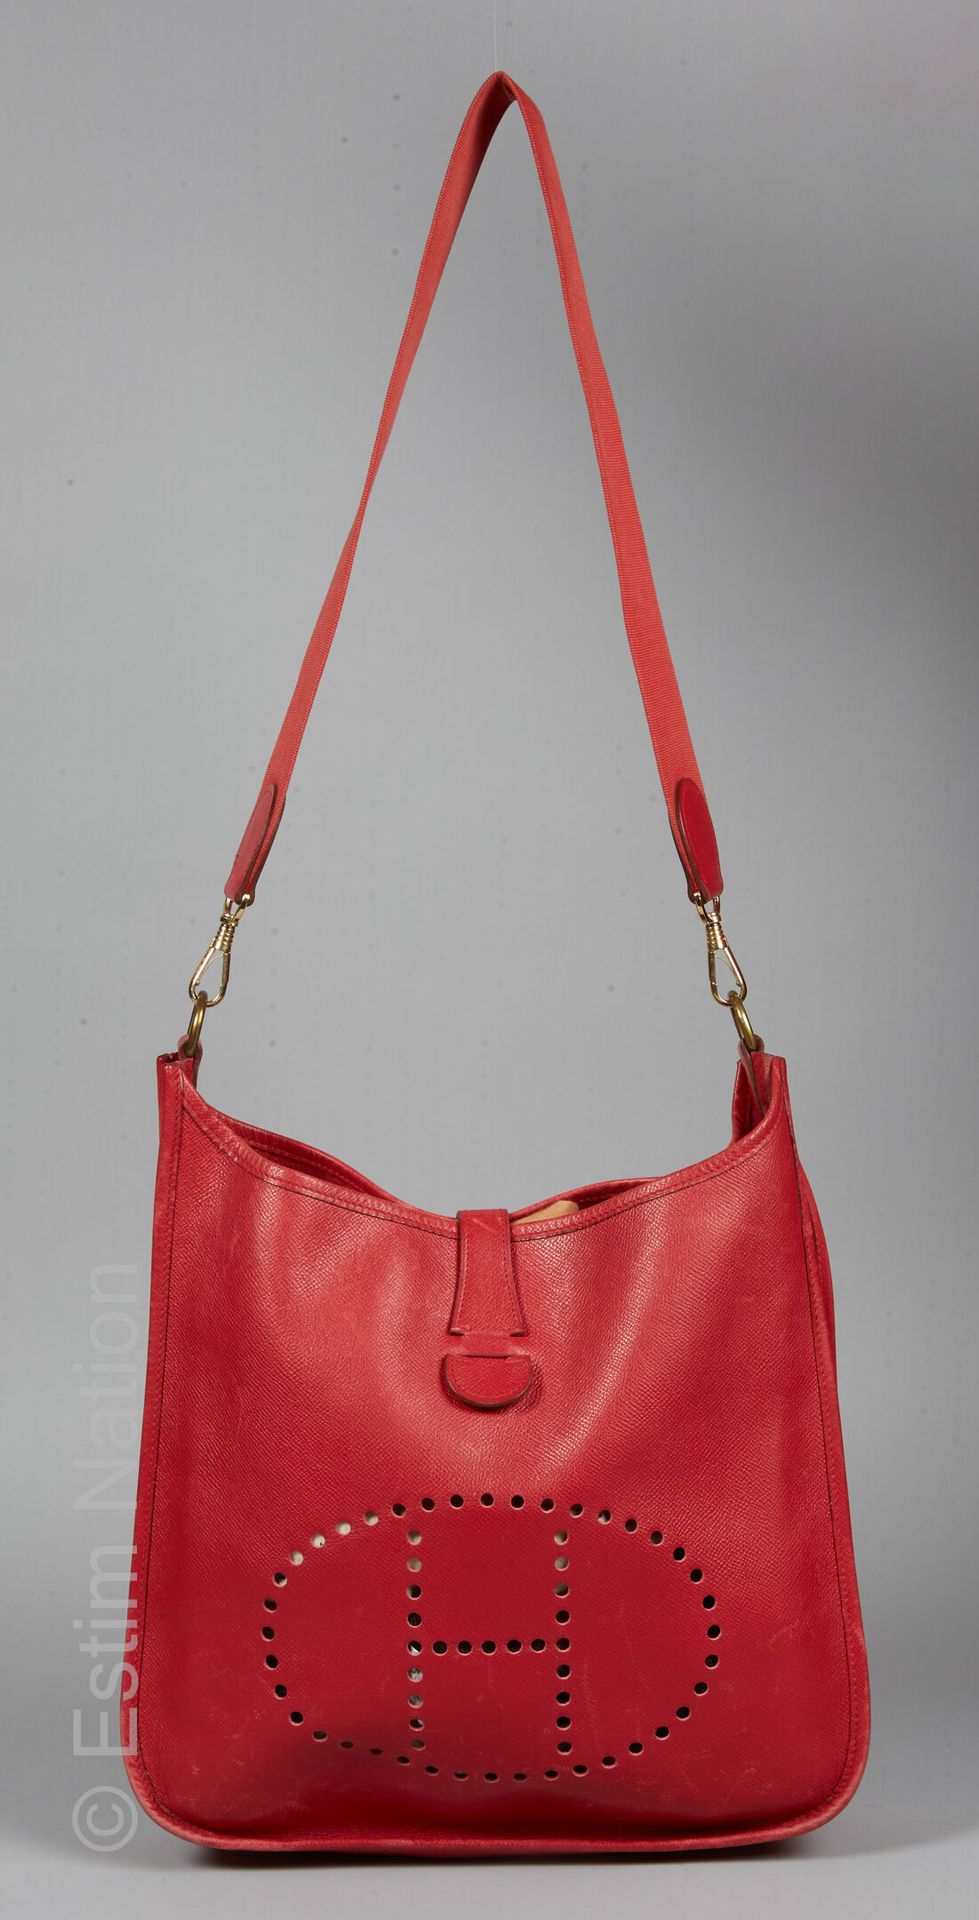 HERMÈS Paris (1991) BAG "EVELYNE" in red Courchevel leather (30 x 33 x 7 cm) (im&hellip;